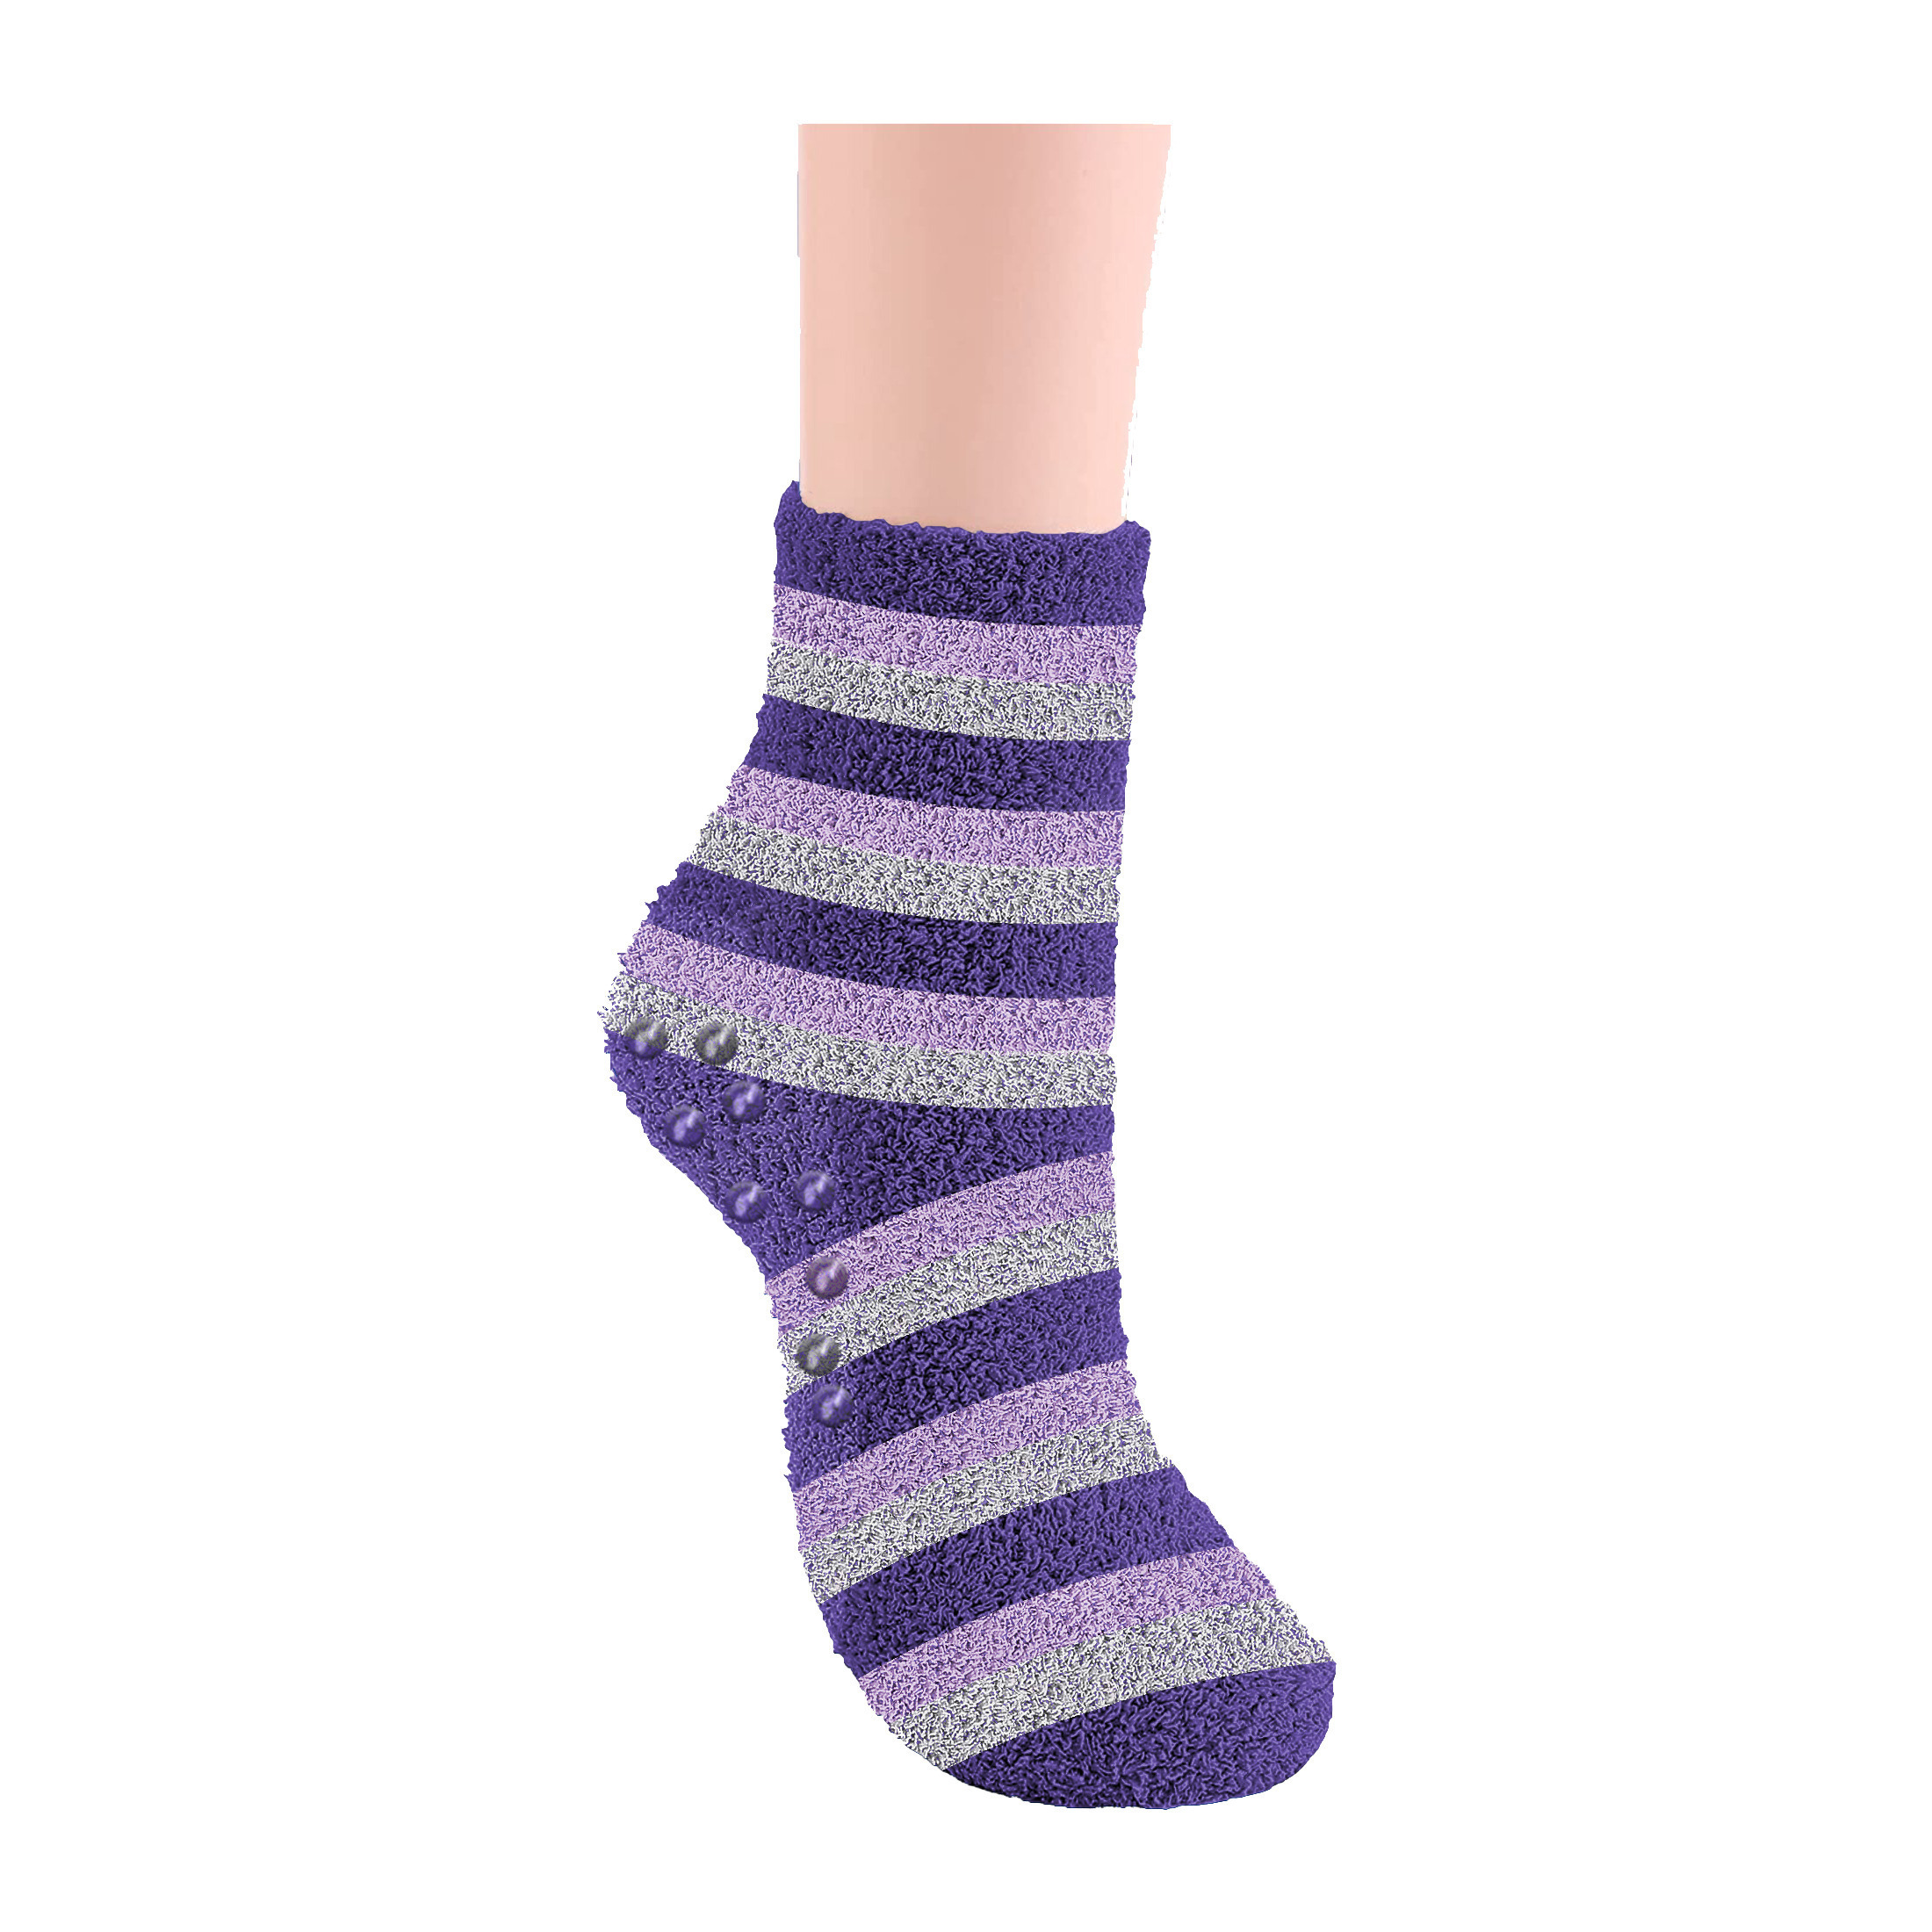 4-Pairs: Women's Non-Slip Warm Soft Fluffy Cozy Fuzzy Plush Socks For Winter - Striped